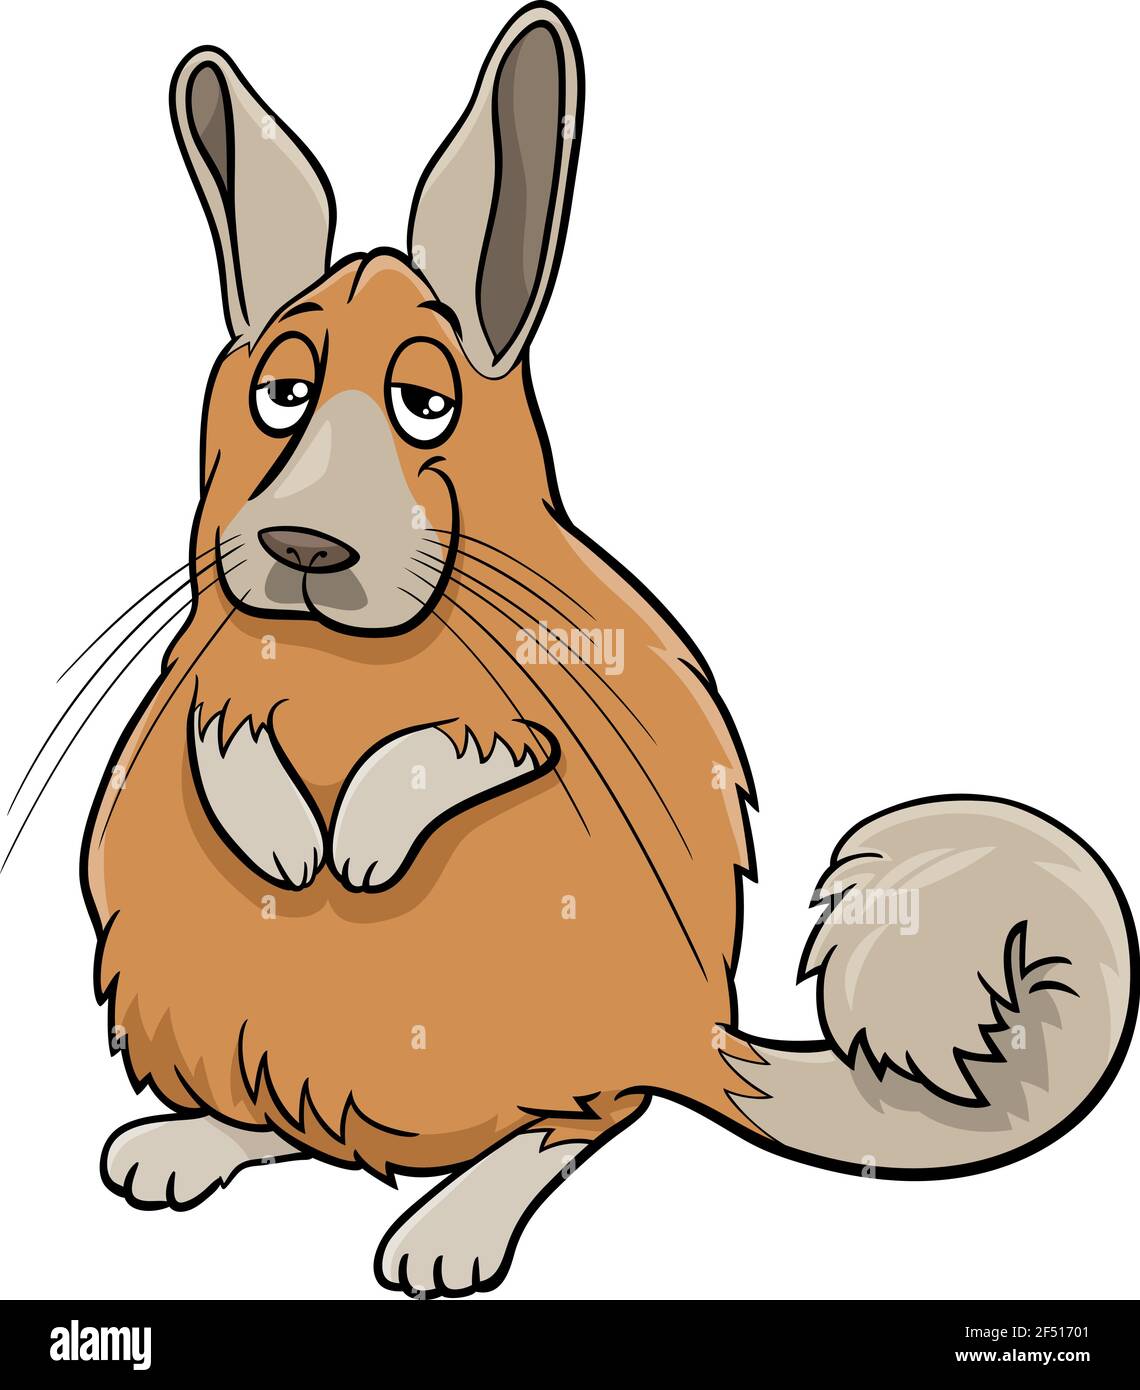 Cartoon illustration of viscacha comic animal character Stock Vector